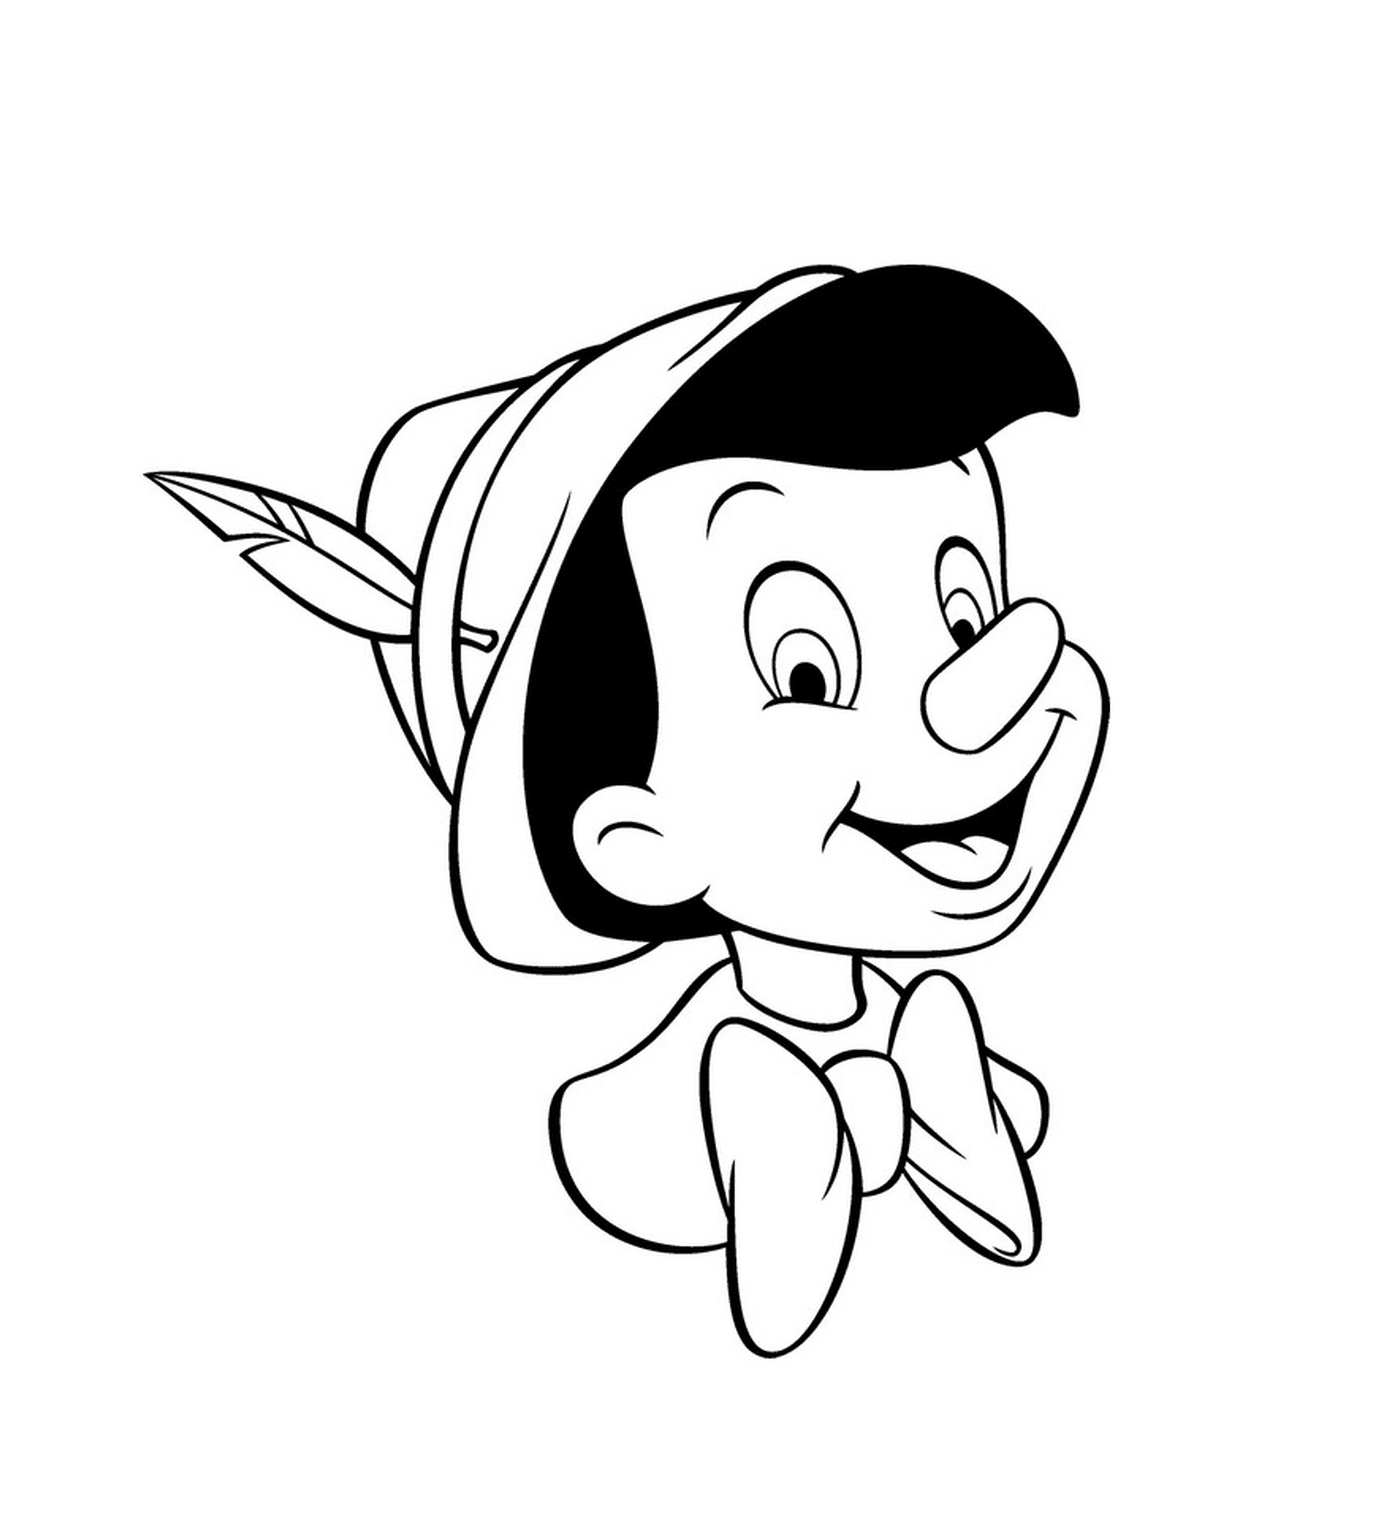   Pinocchio joyeux et bavard 